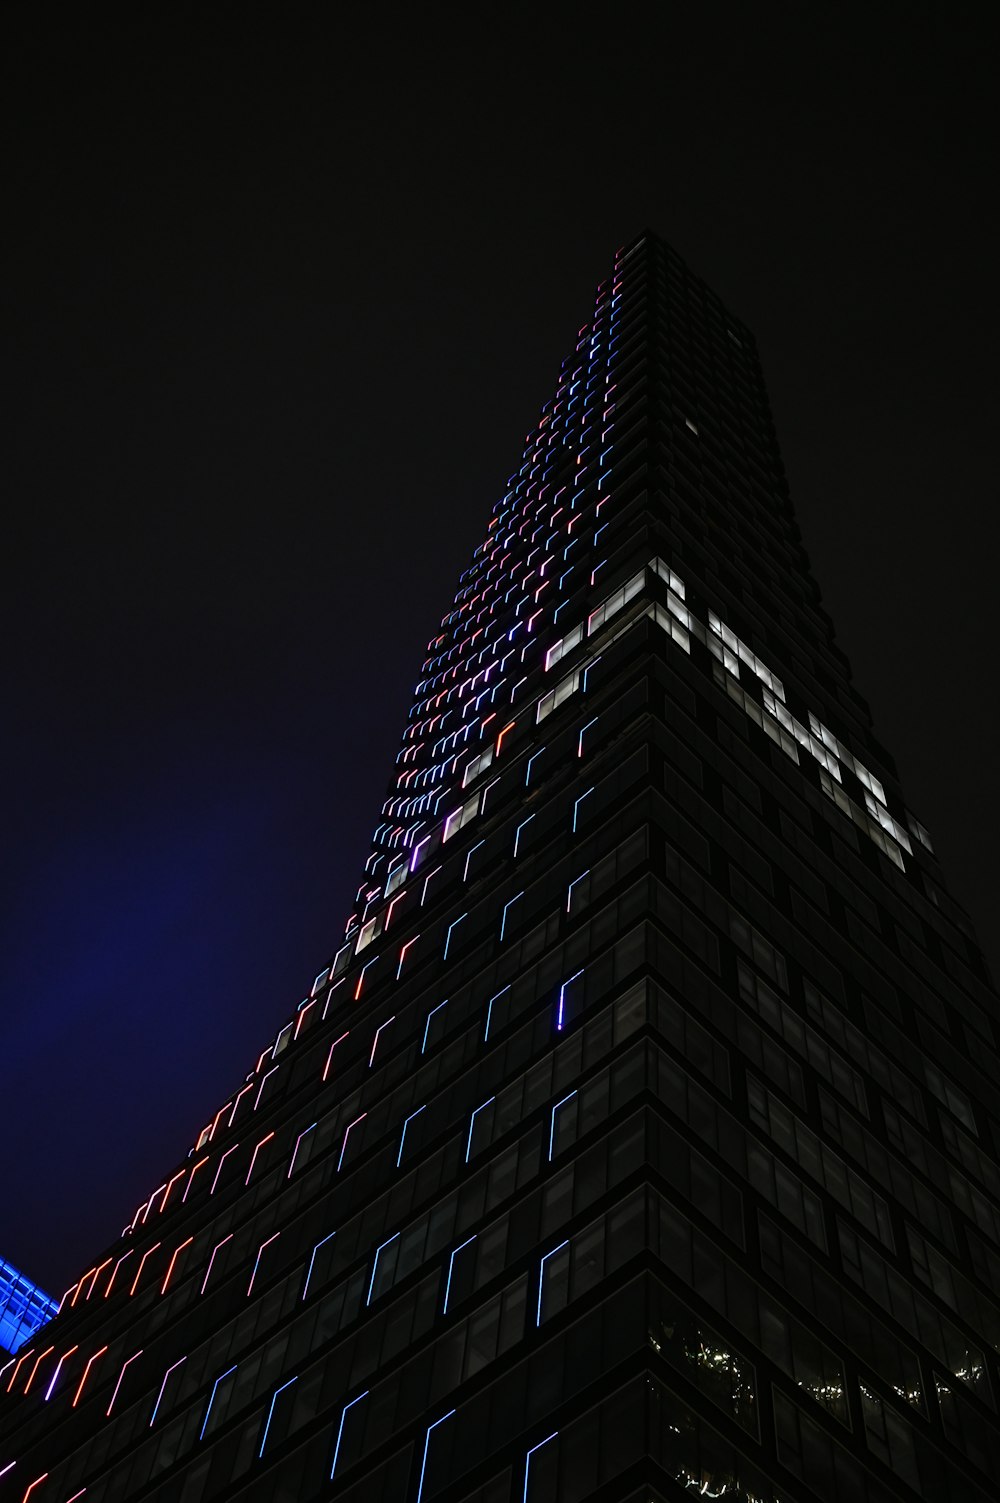 edifício alto preto e cinza